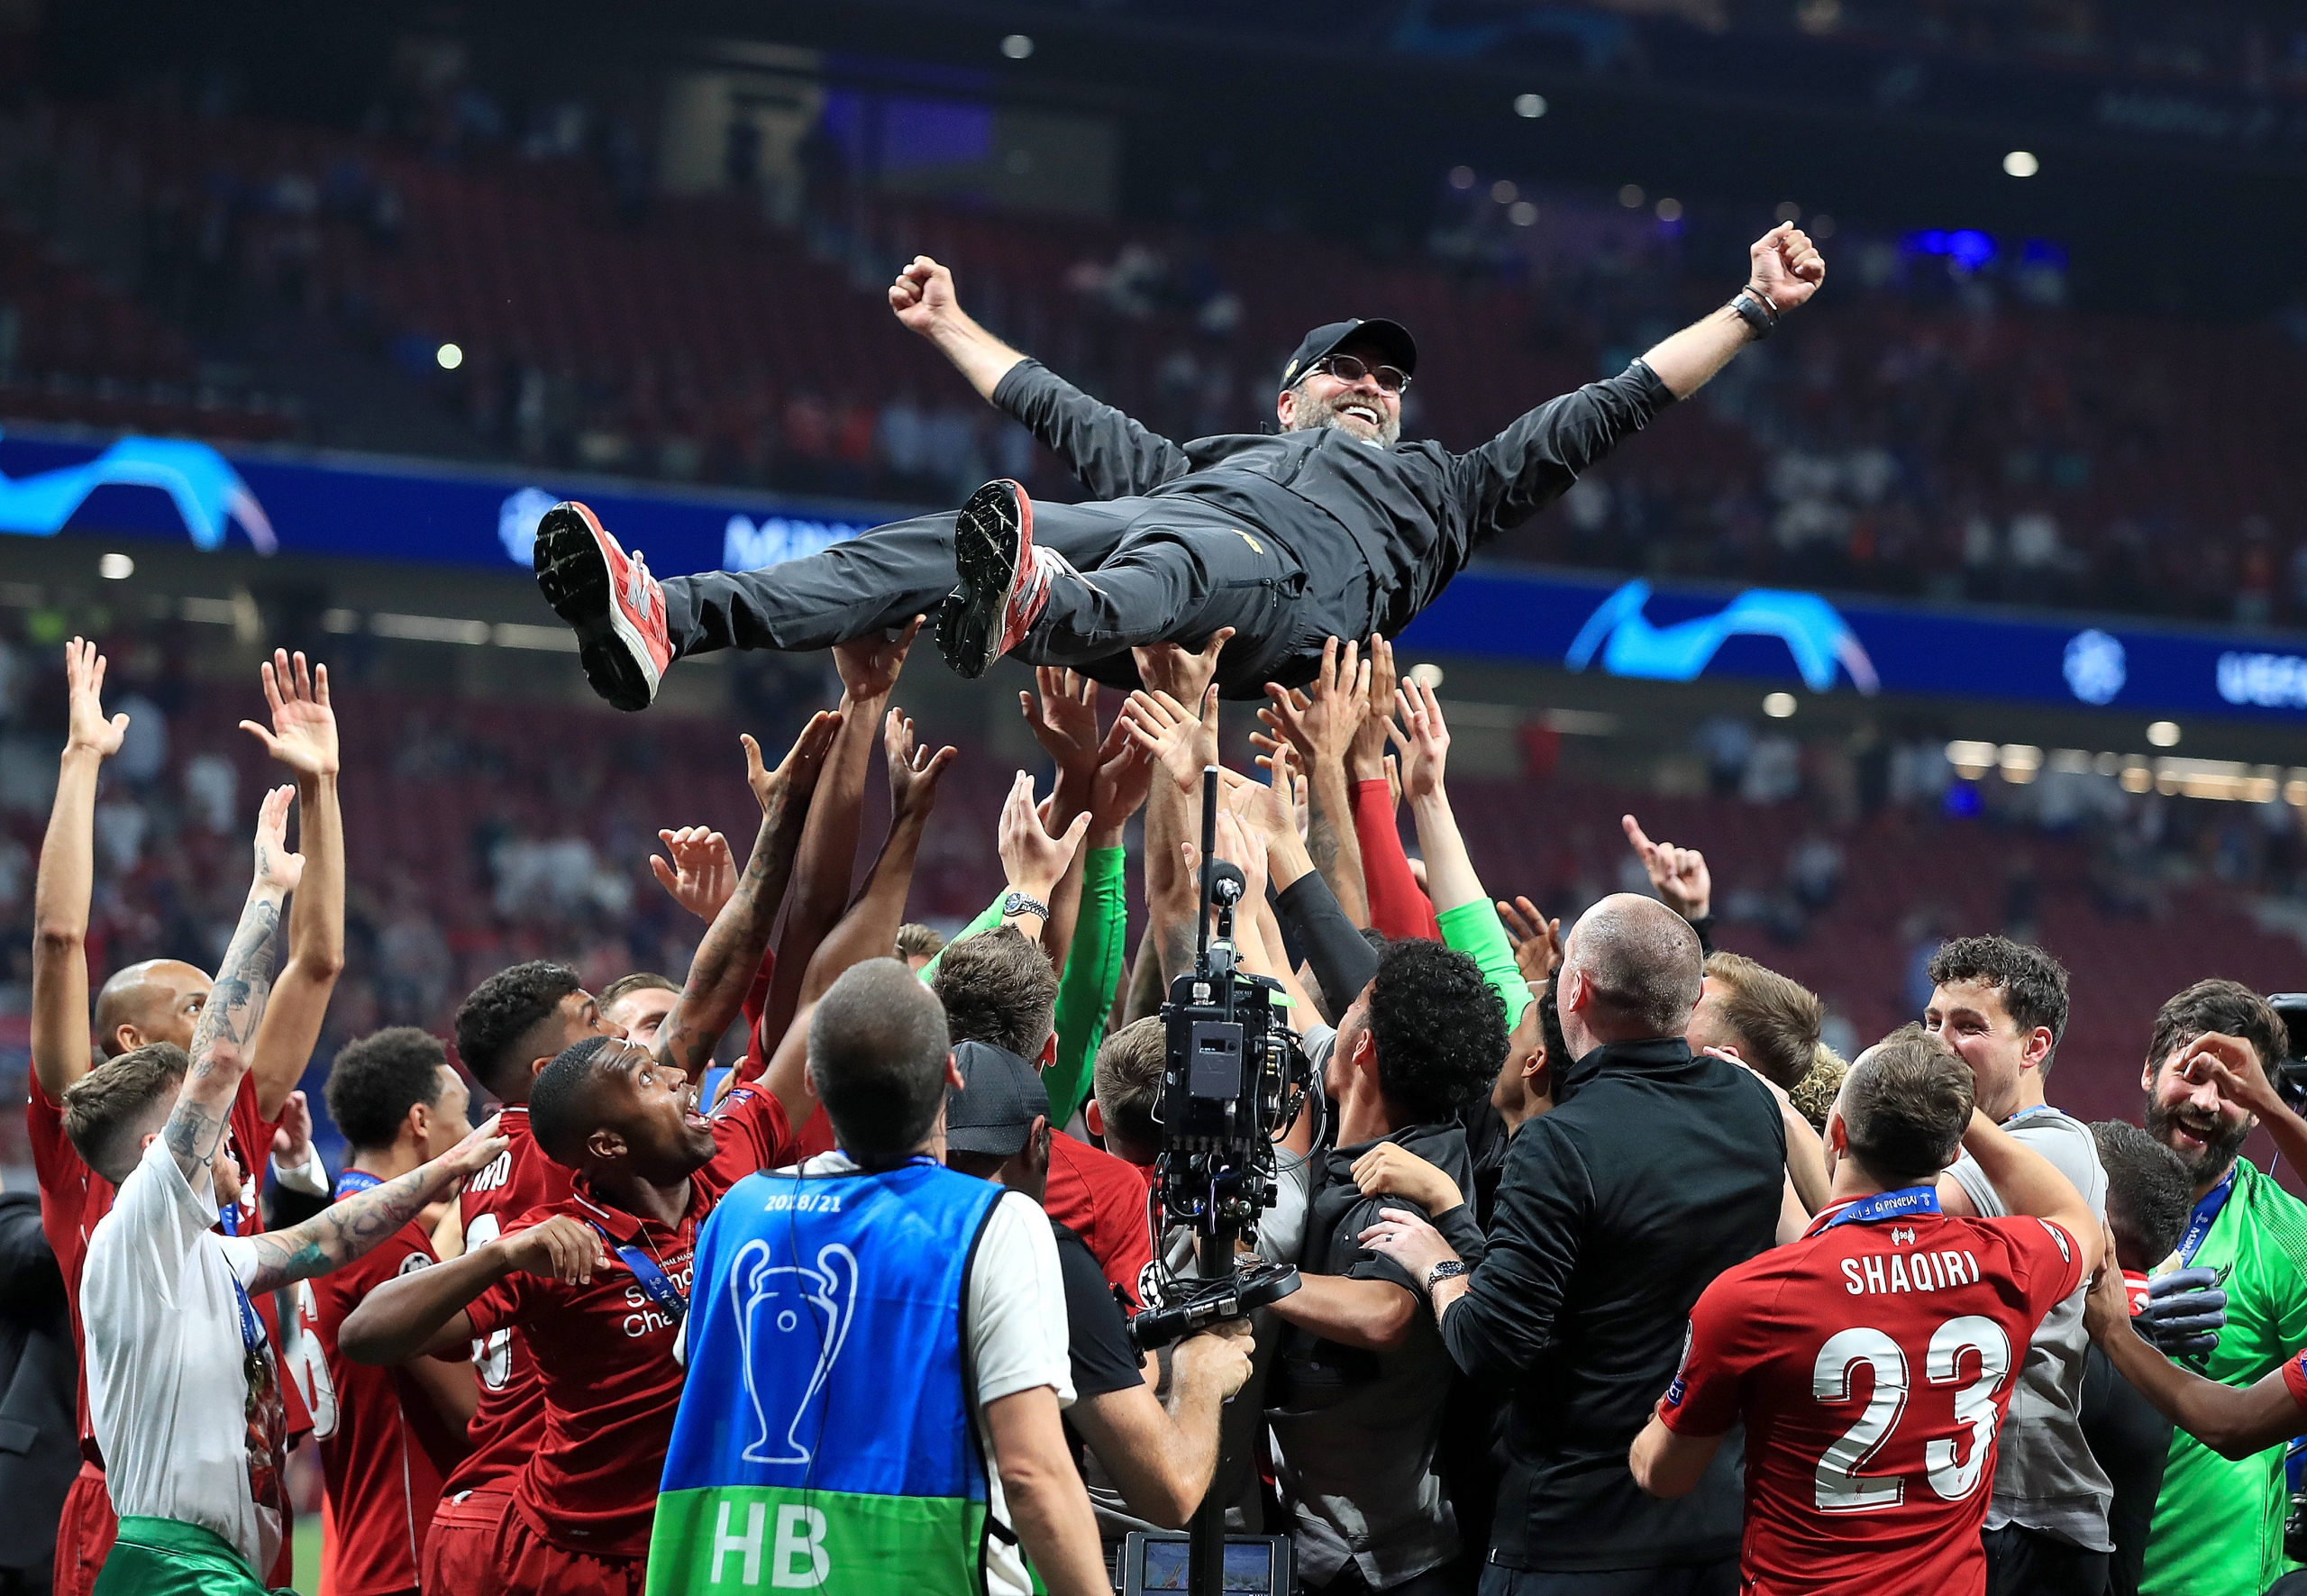 Jürgen Klopp and Liverpool celebrating their 2019 Champions League triumph. Source: Imago Images